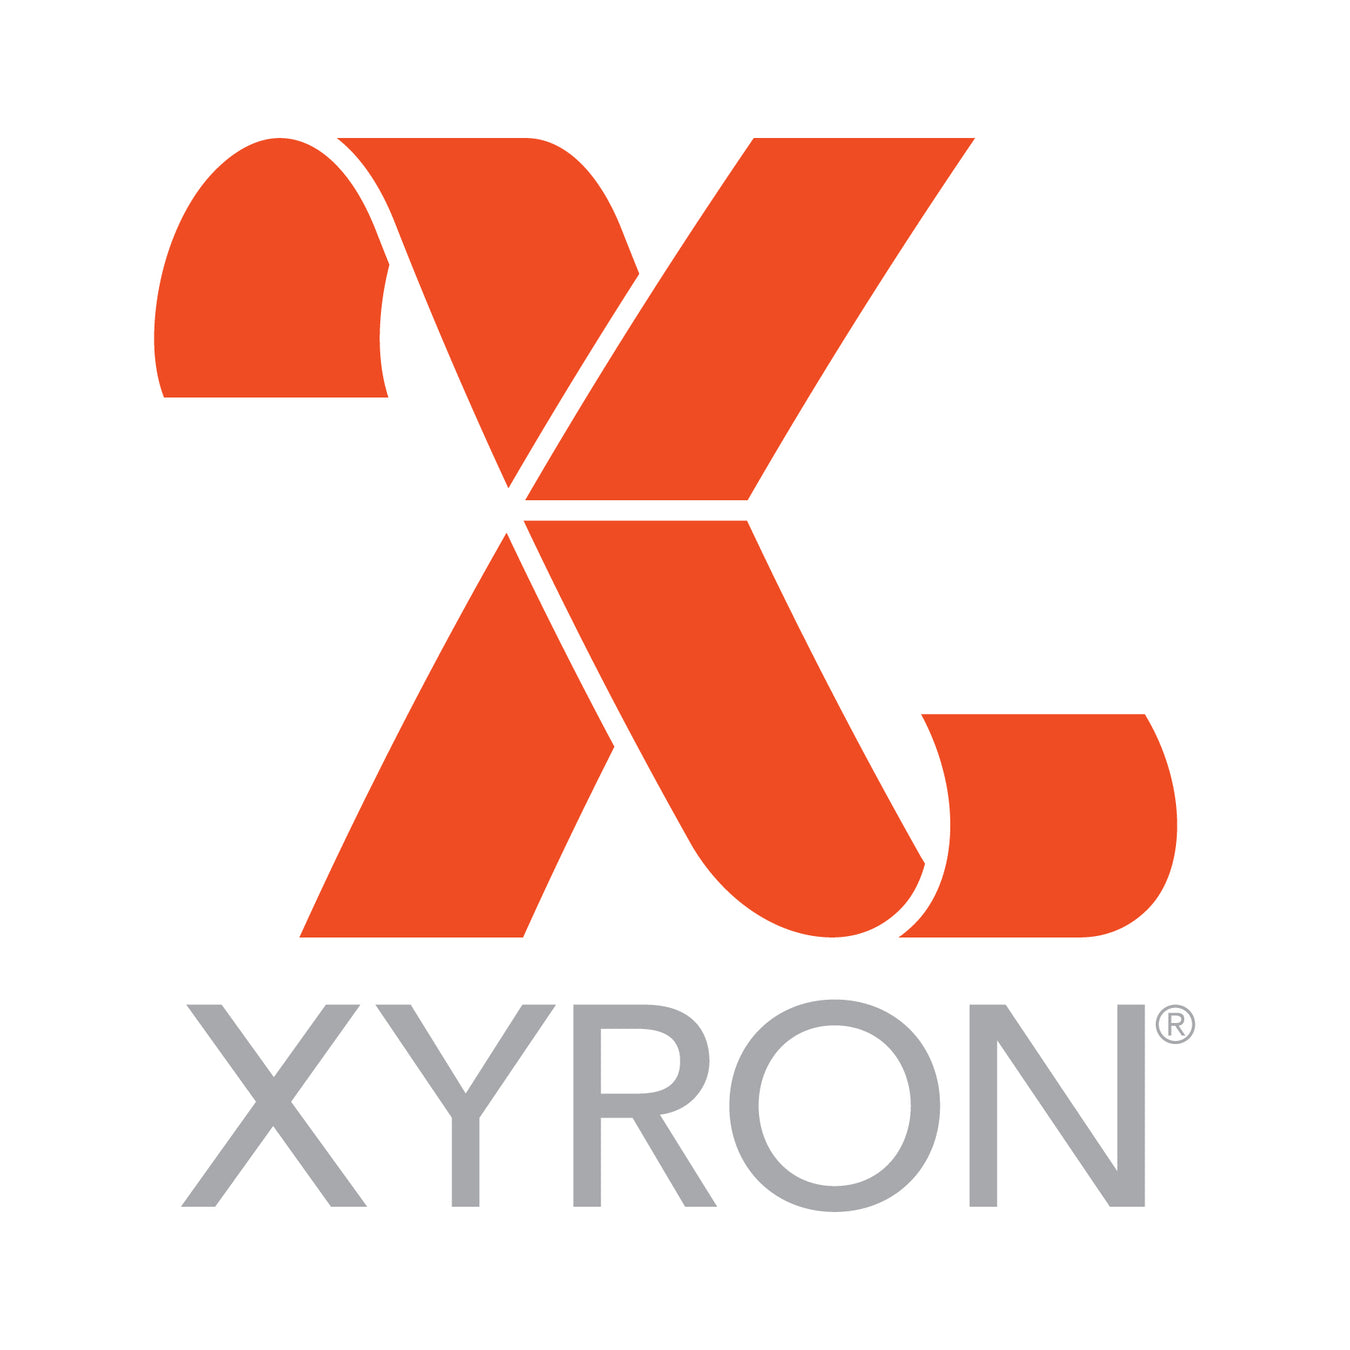 Xyron | The Perfect Supplies Company